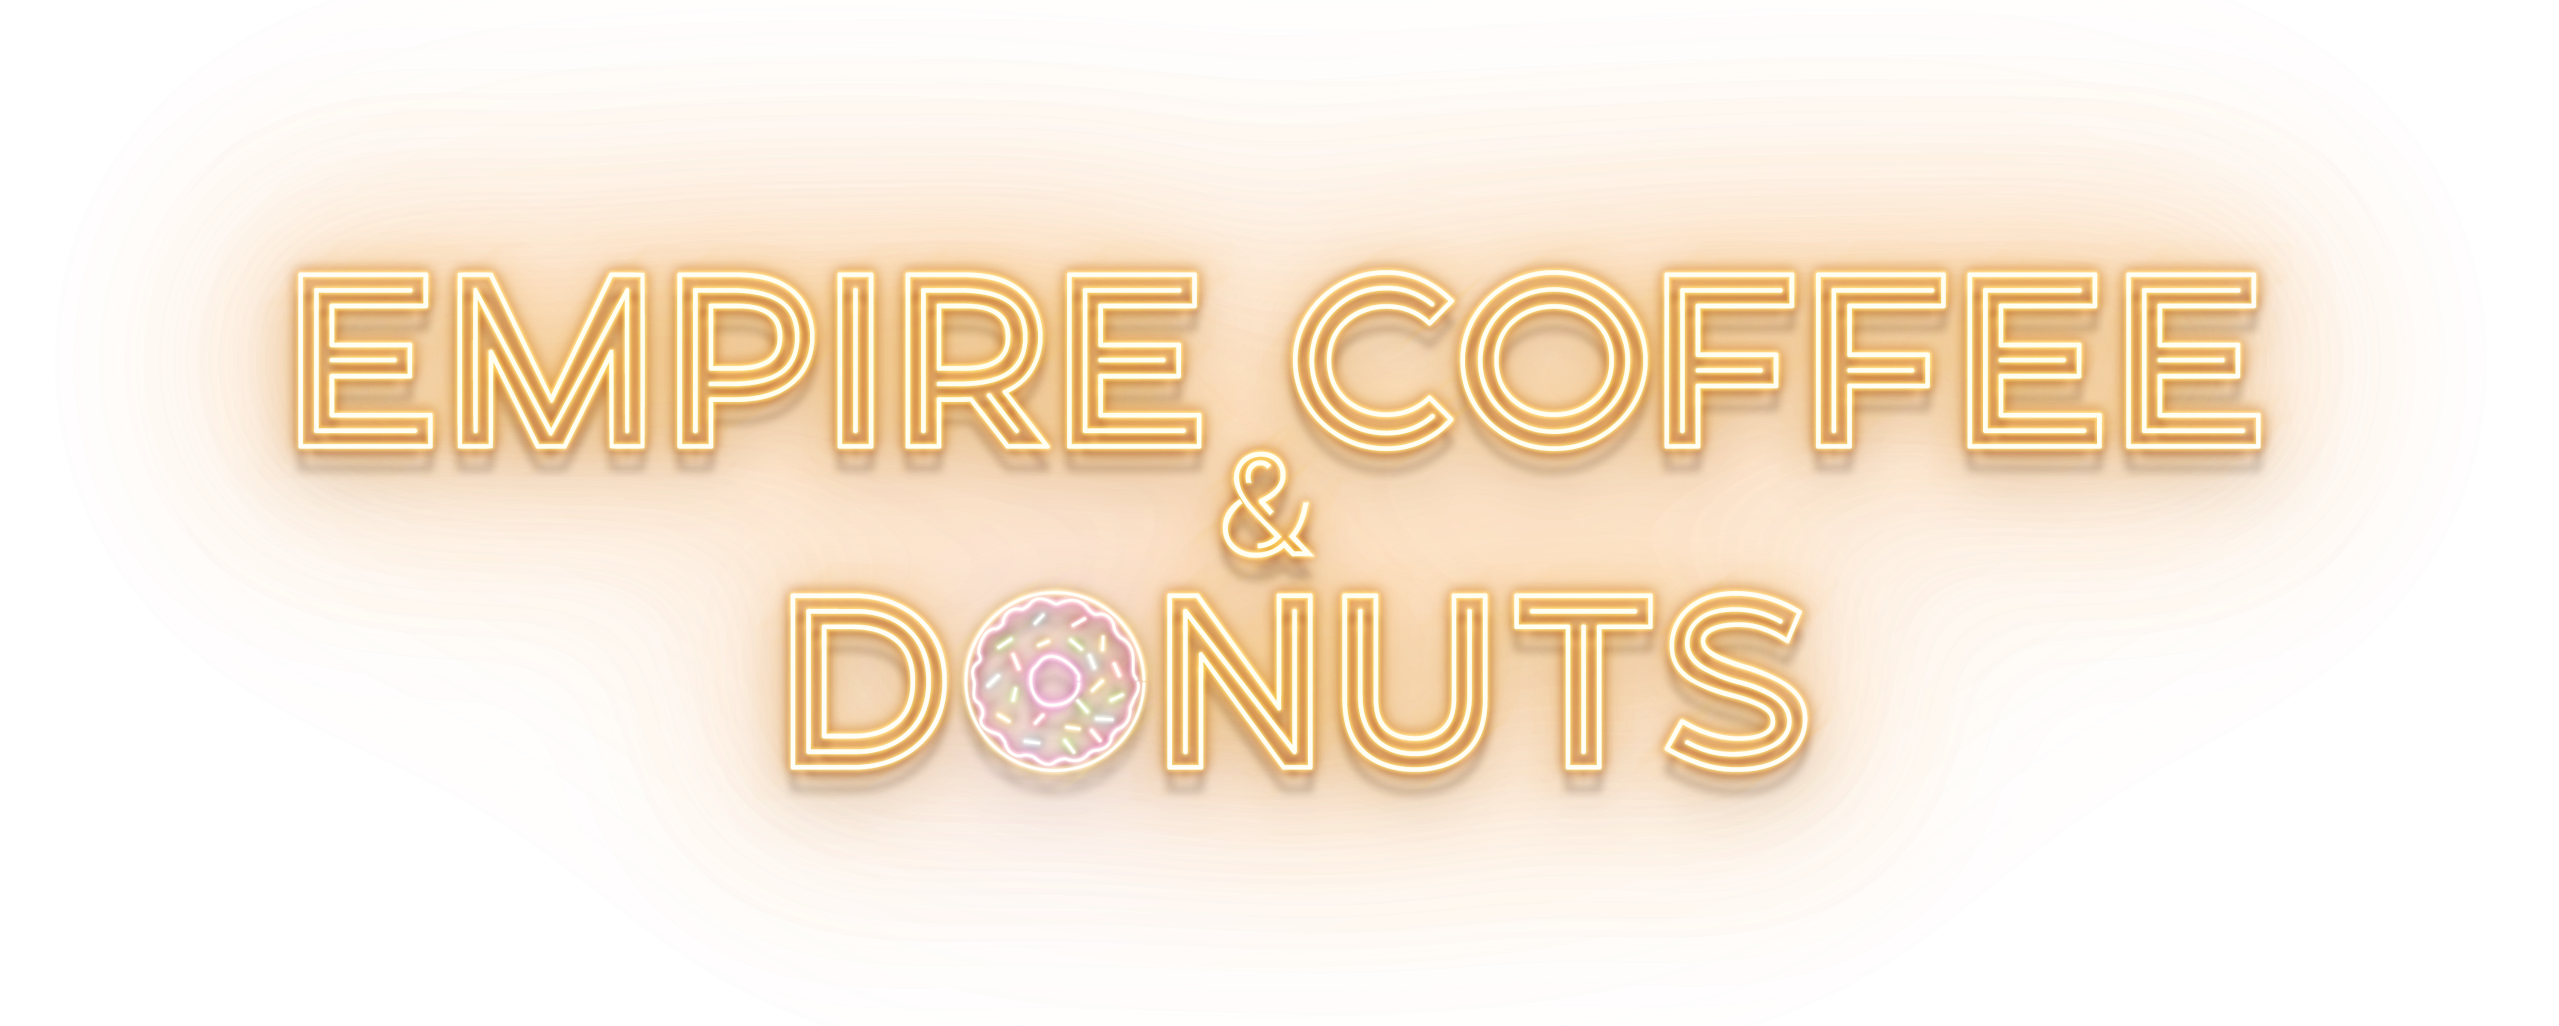 Empire Coffee & Donuts Logo